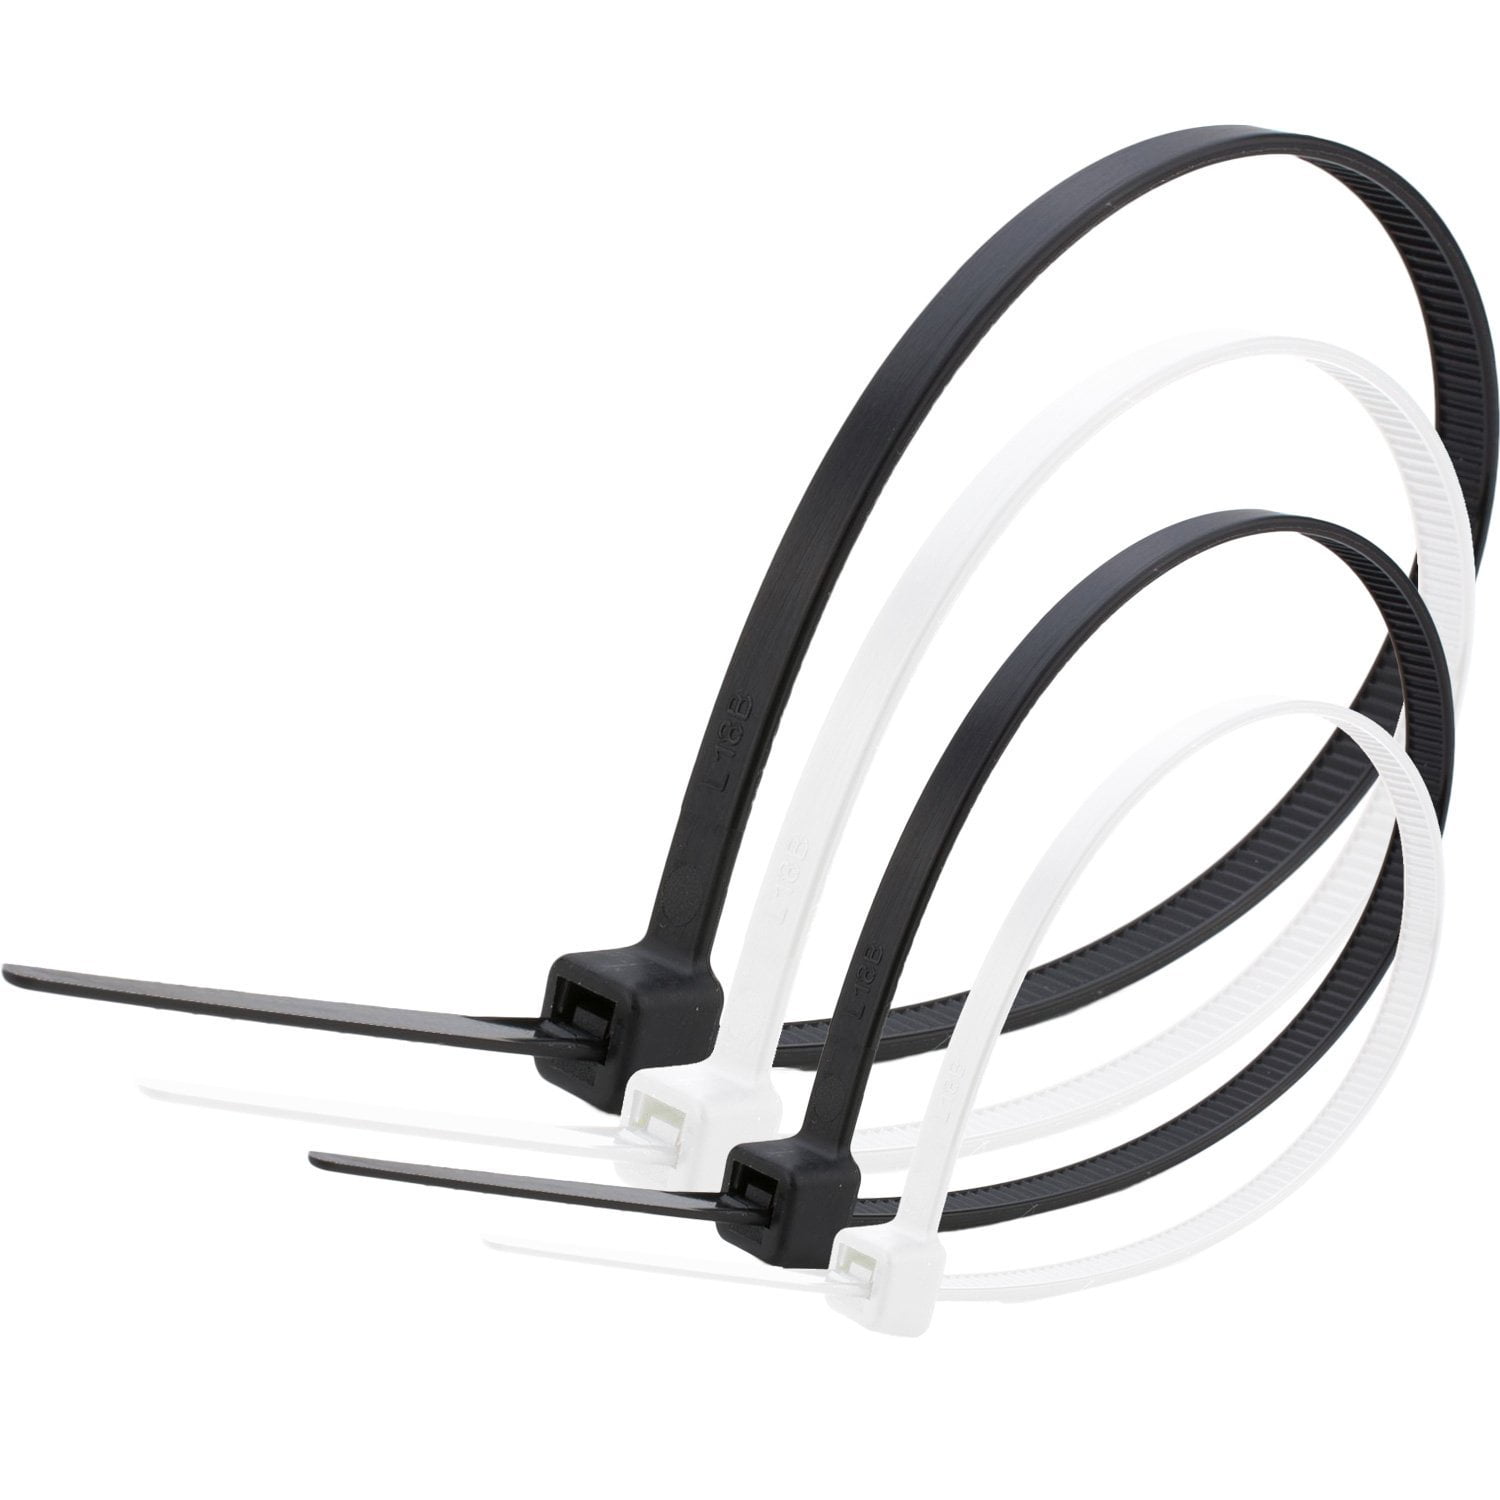 Simple Deluxe 1000 Pcs Industrial 4" Wire Cable Zip Ties Nylon Tie Wraps 